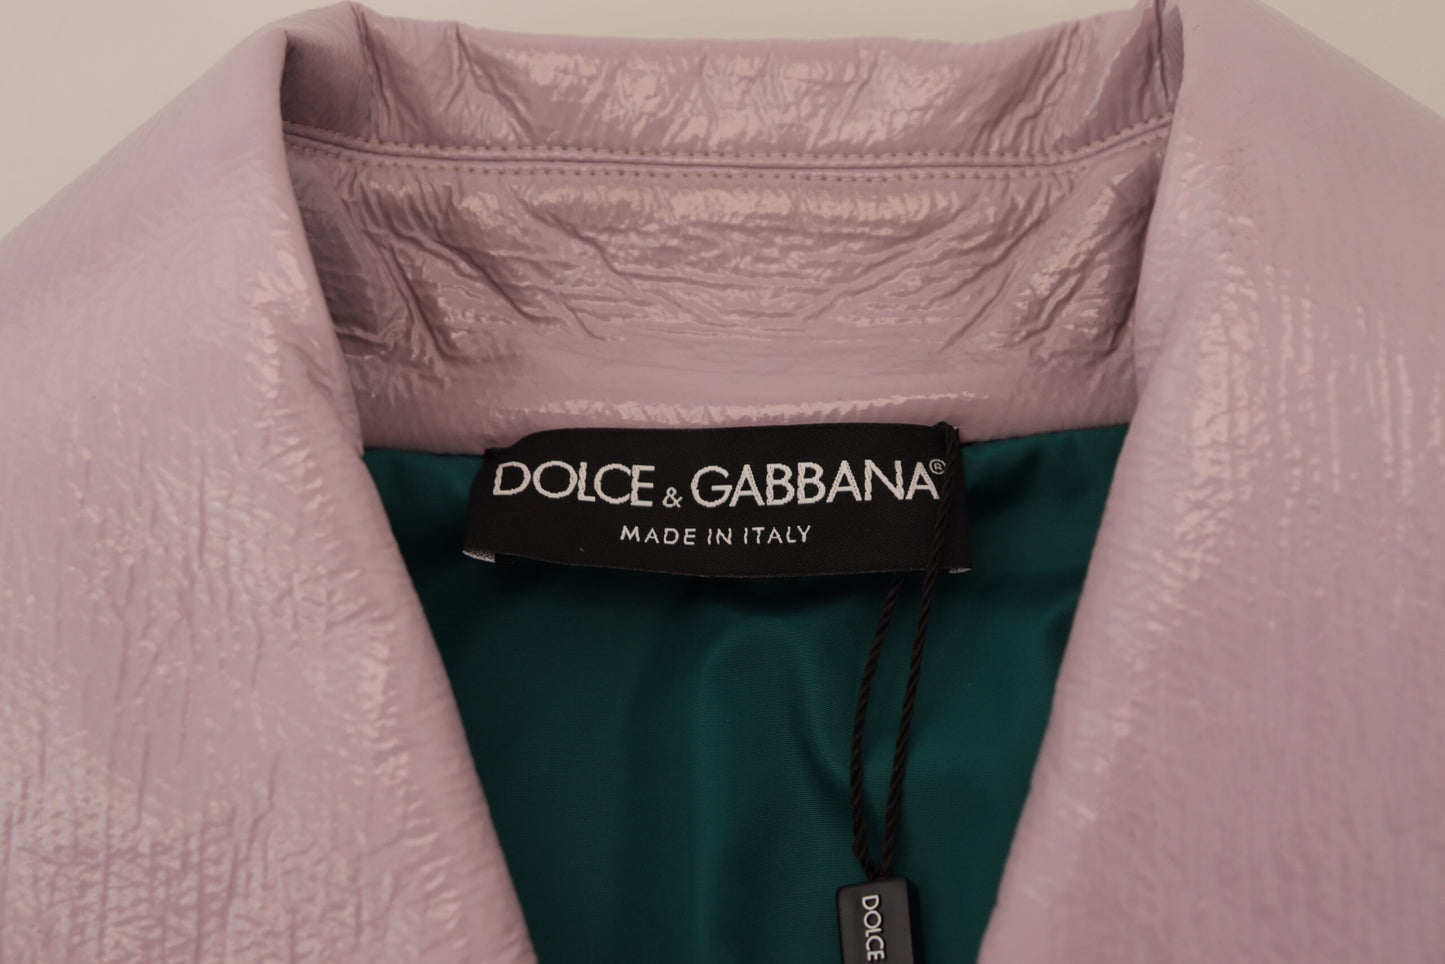 Dolce & Gabbana Chic Purple Cropped Jacket - A Style Statement